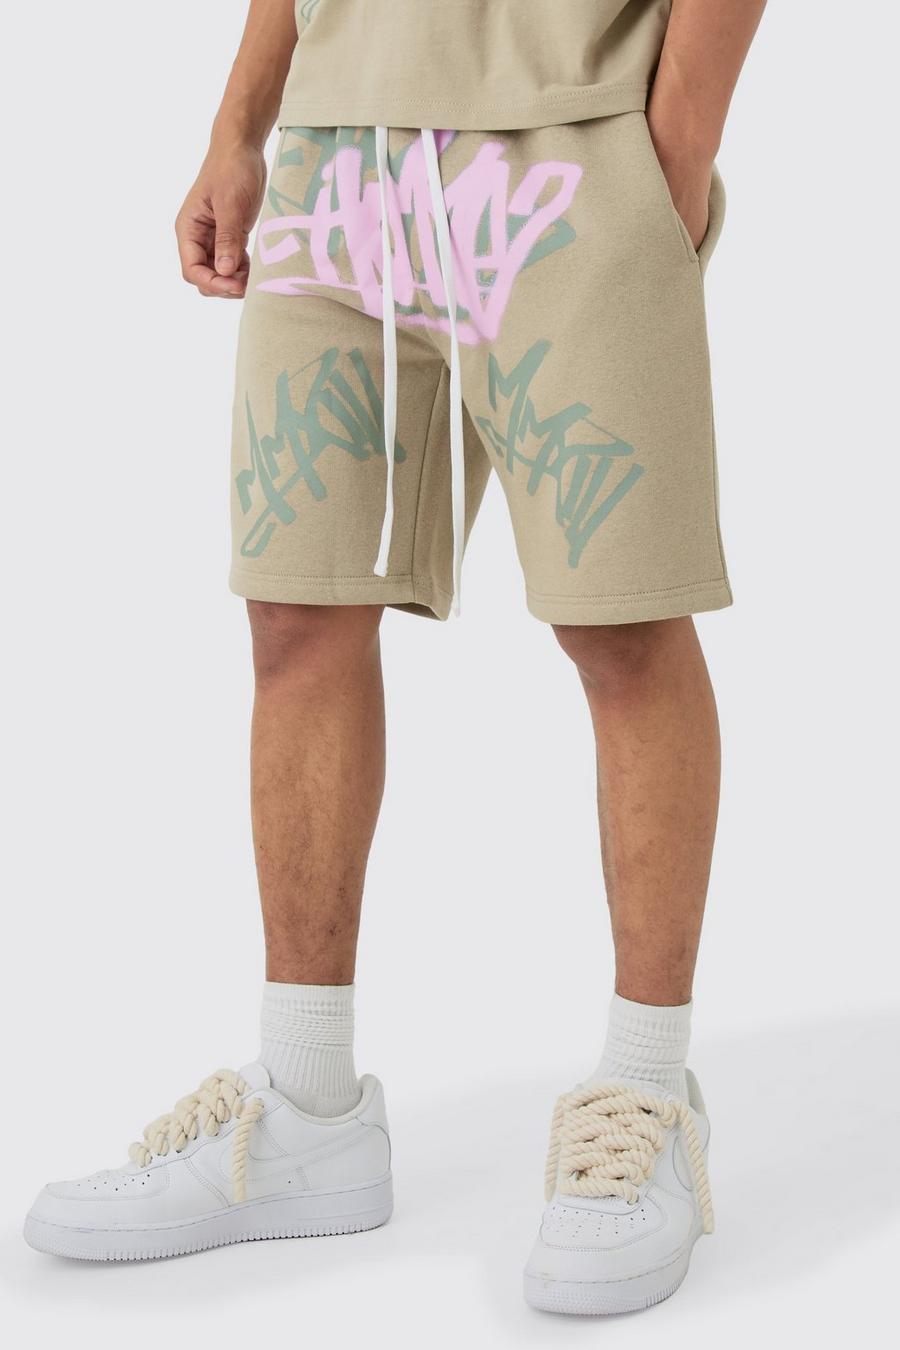 Lockere Jersey-Shorts mit Graffiti-Print, Light khaki